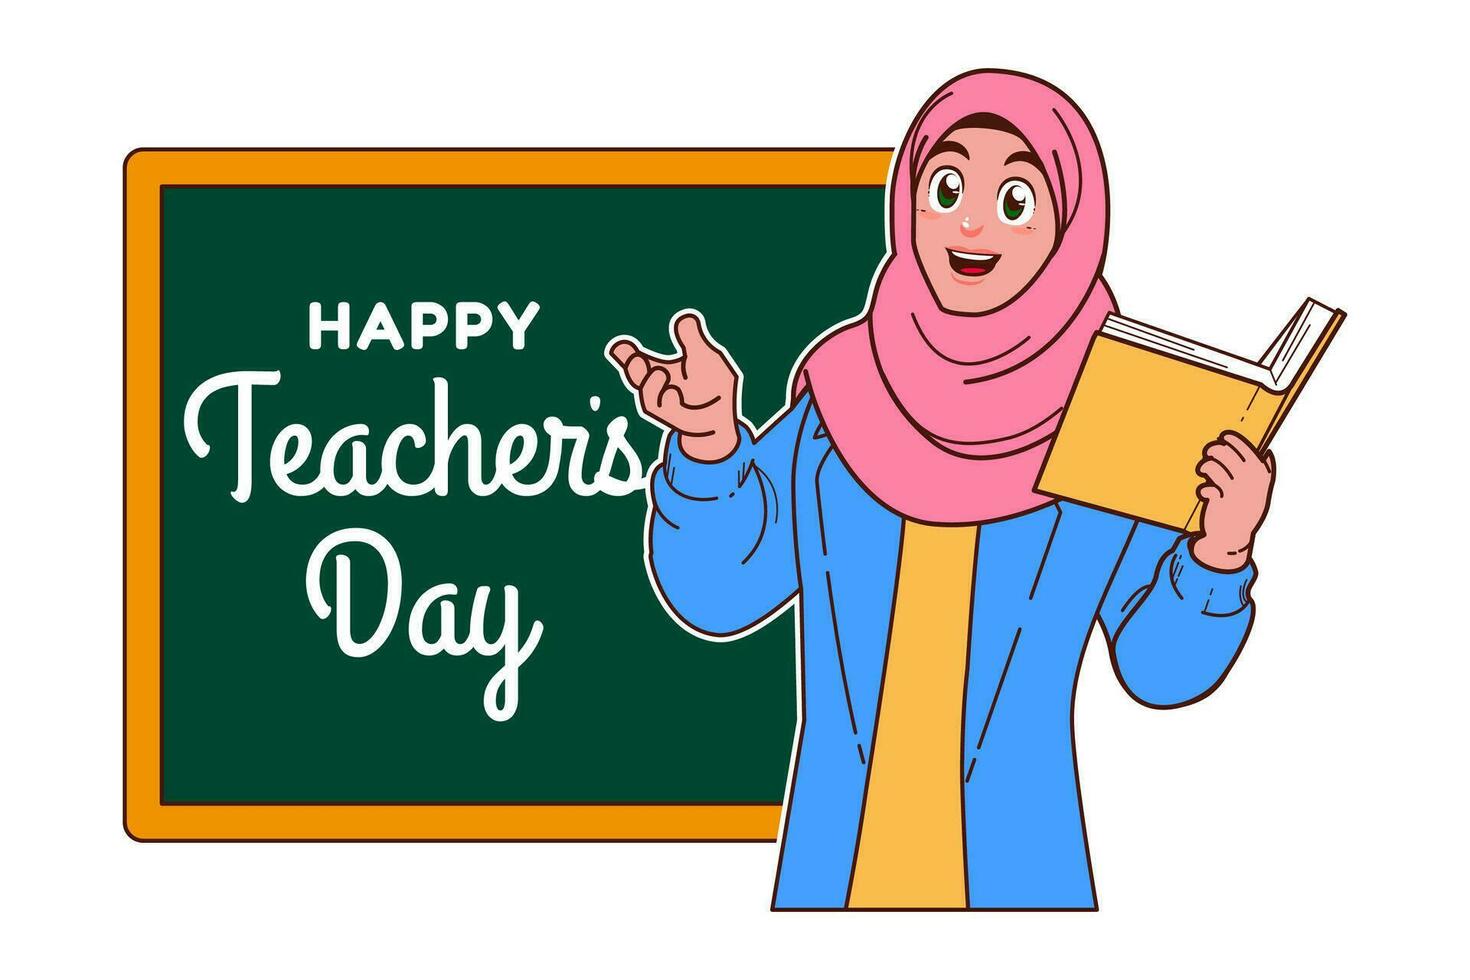 contento profesores día con musulmán hembra profesor y pizarra vector